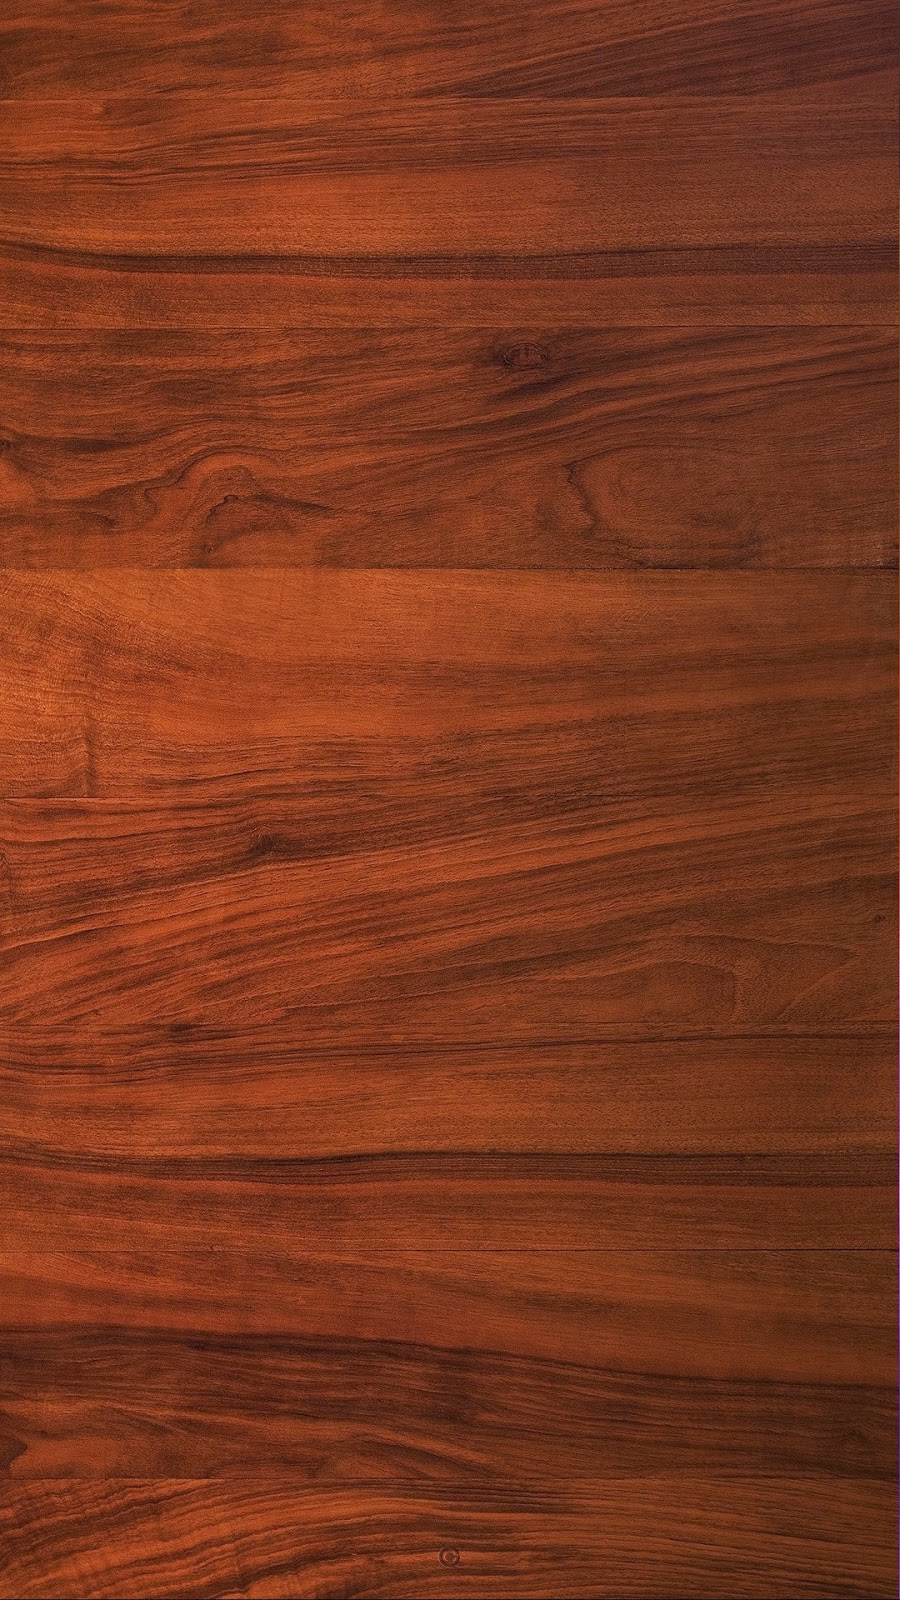 wood iphone wallpaper,wood,wood flooring,hardwood,wood stain,flooring